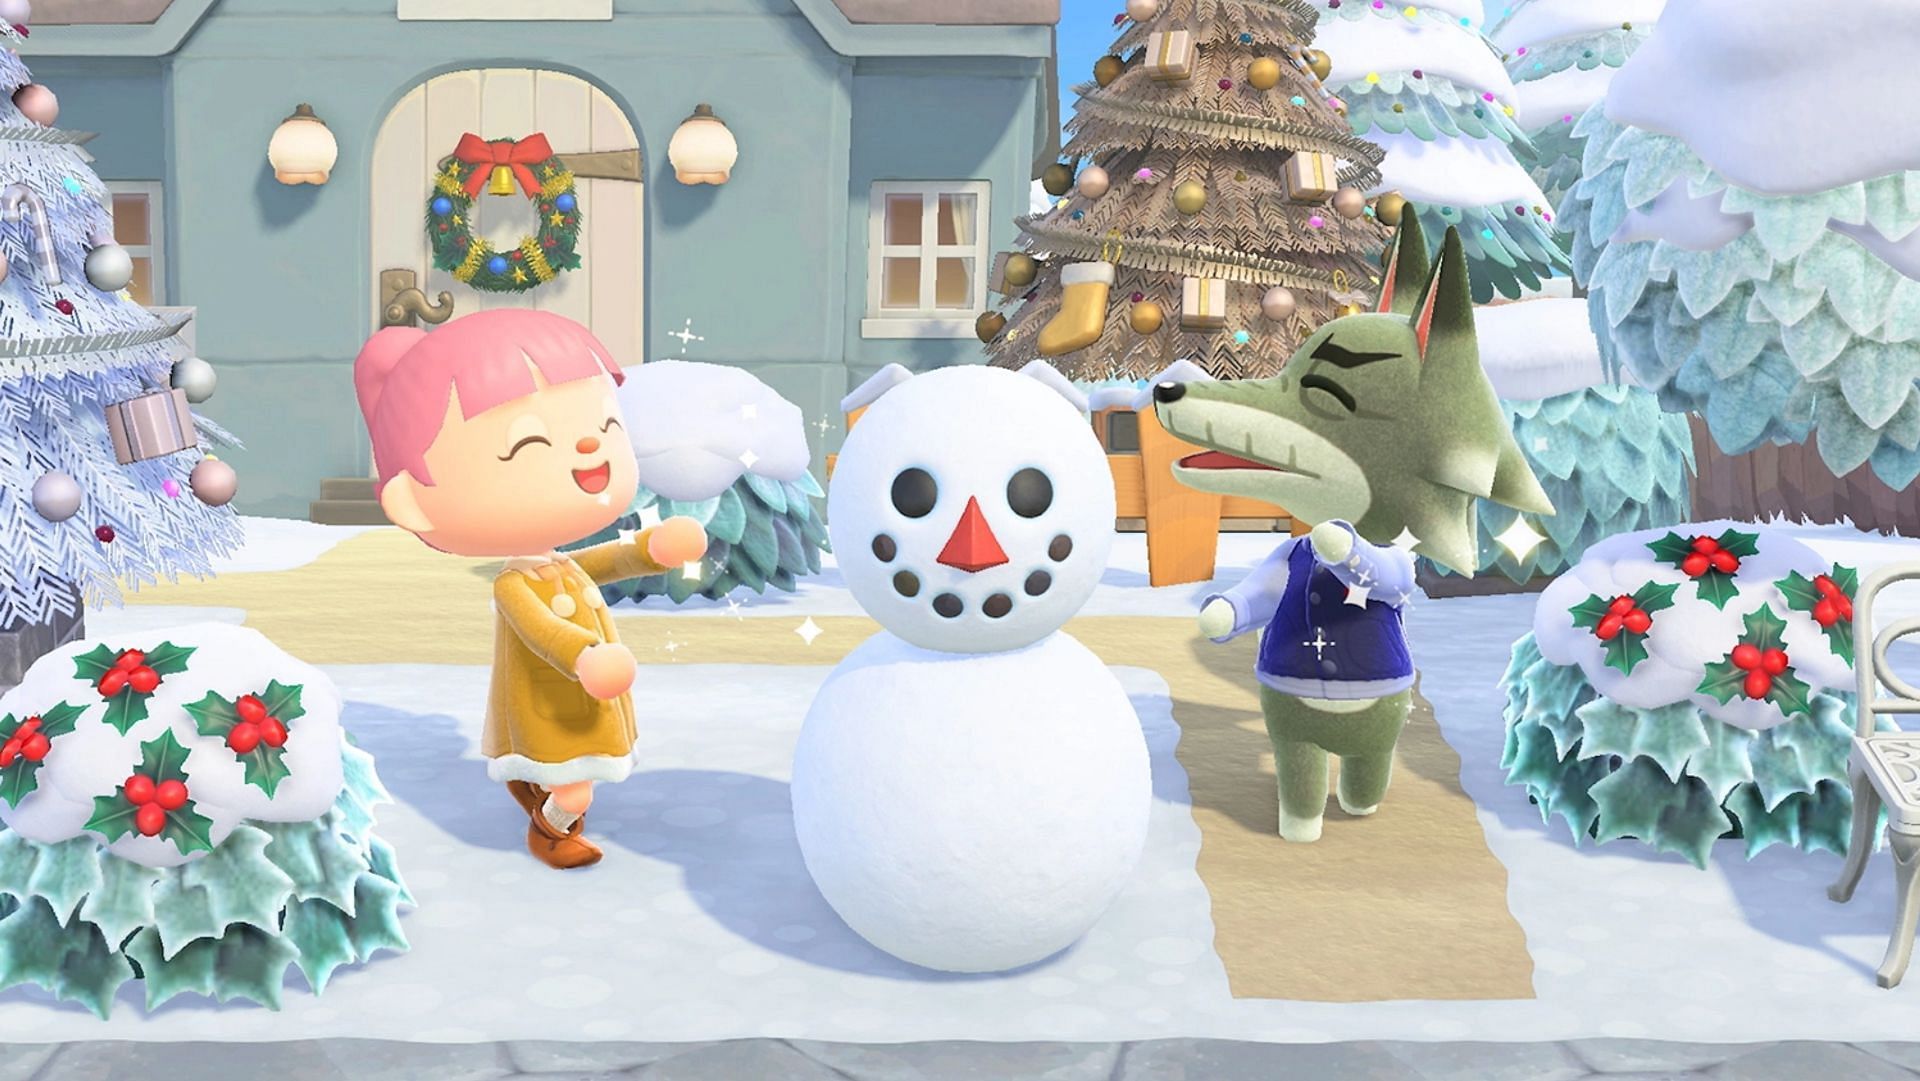 Building a Snowman in Animal Crossing: New Horizons (Image via Nintendo)